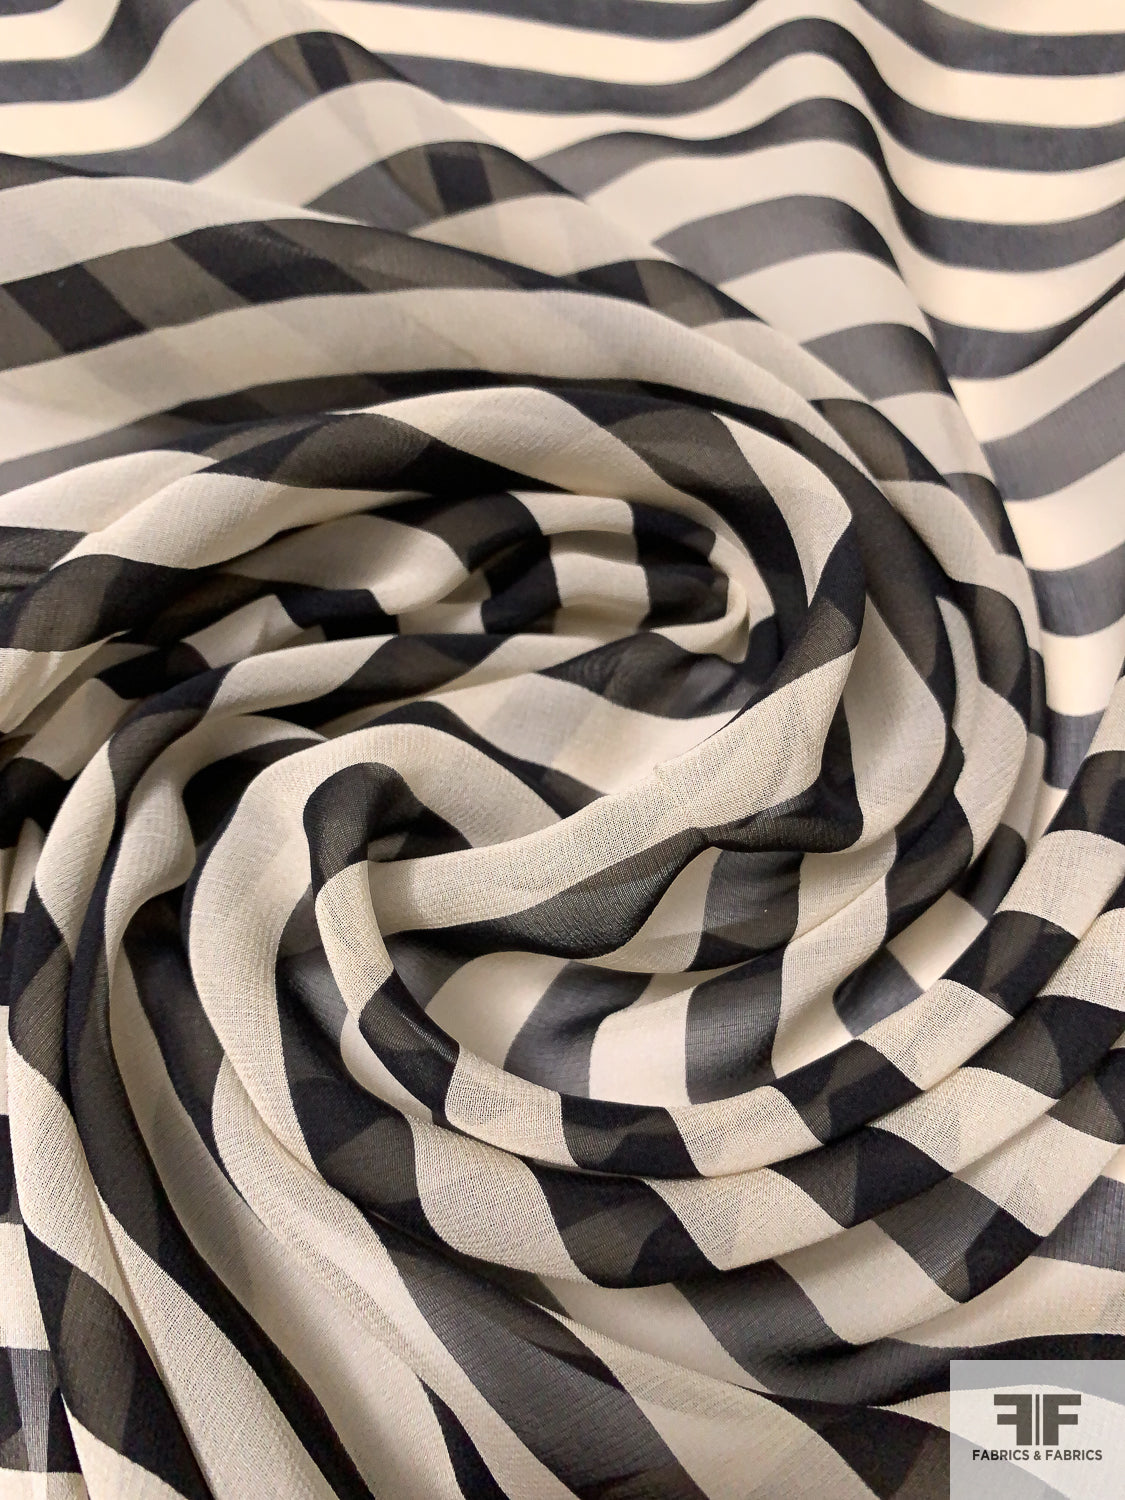 Horizontal Striped Printed Silk Chiffon - Black / Light Beige